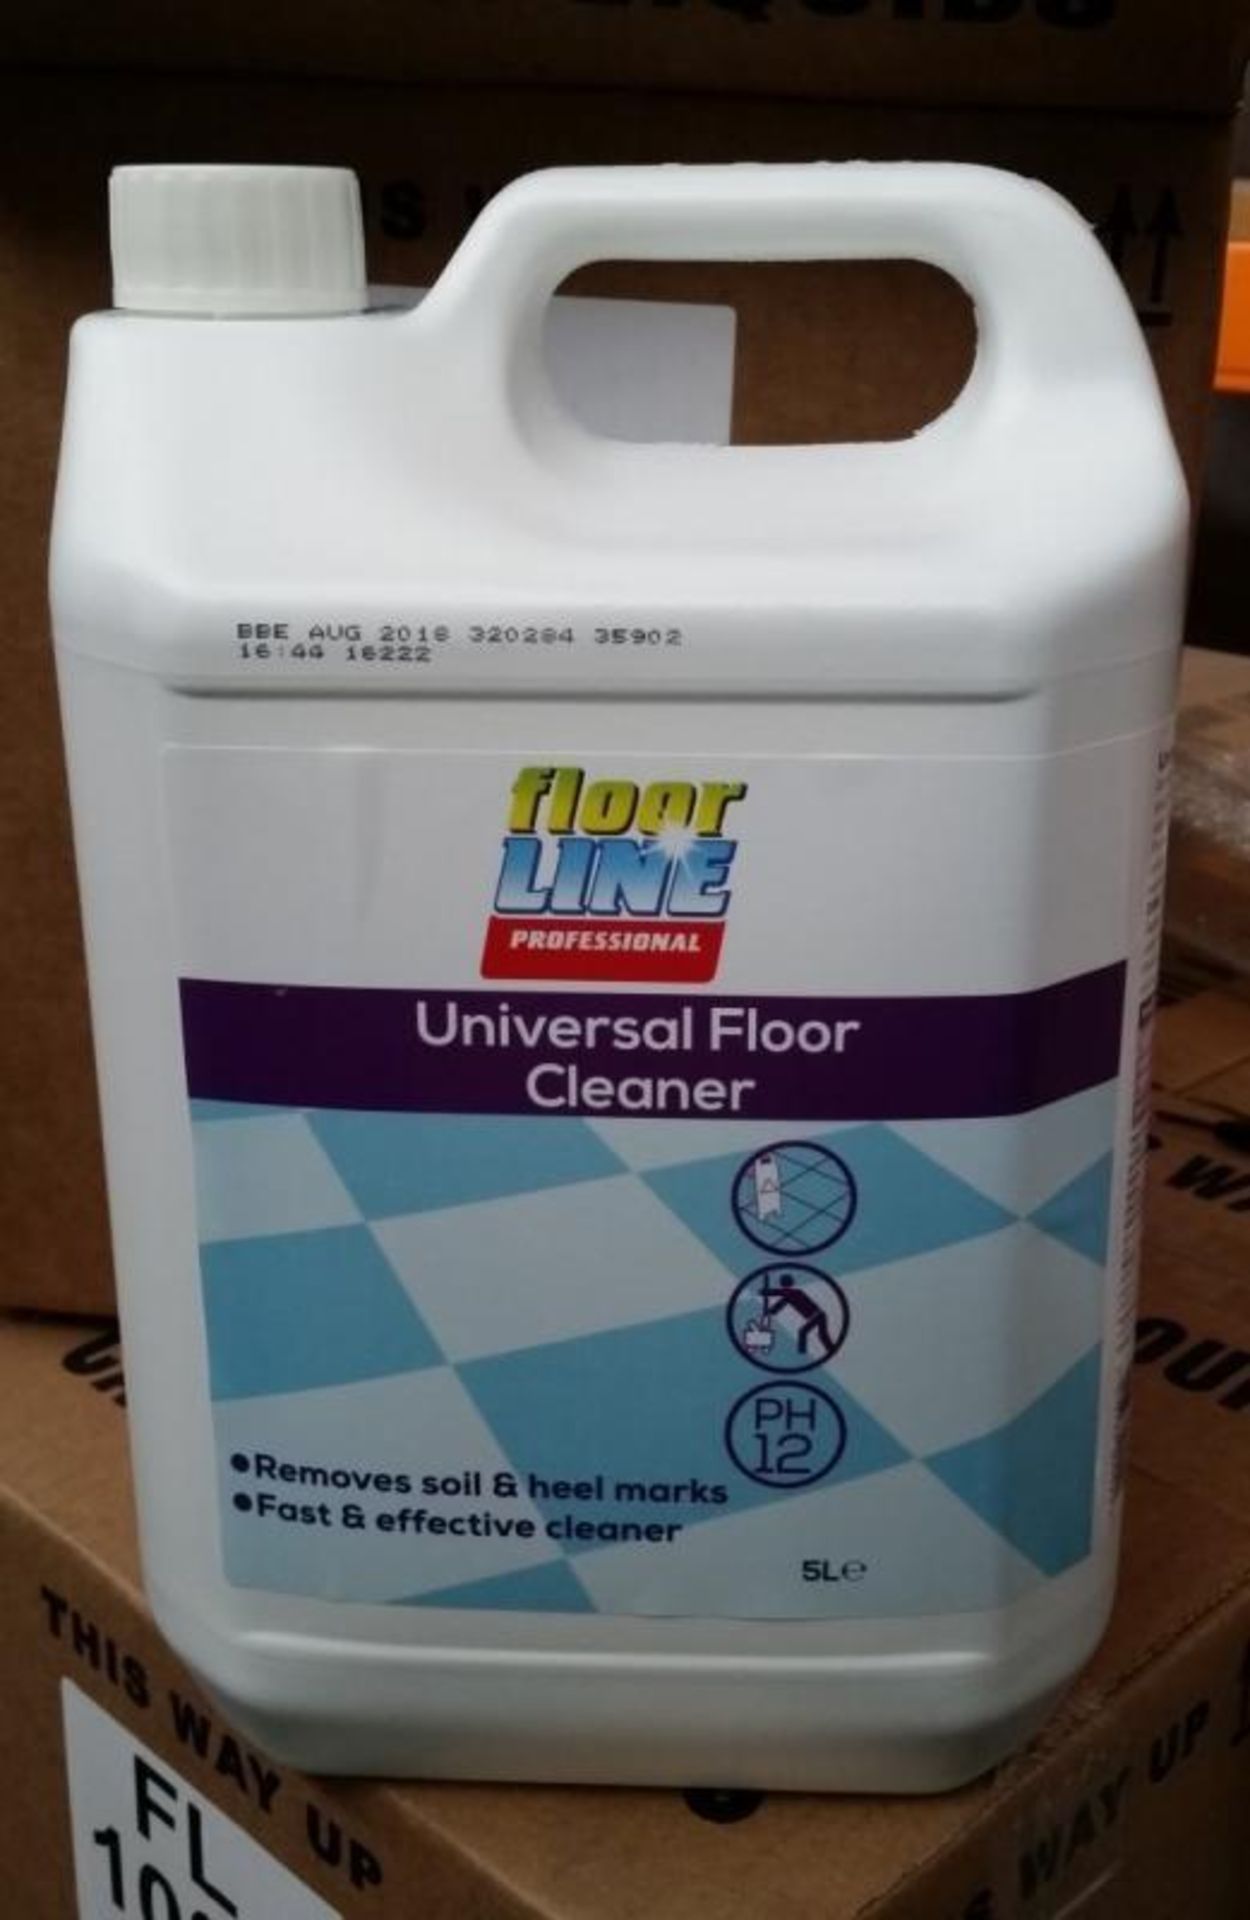 10 x Floor Line Professional 5 Litre Universal Floor Cleaner - Removes Soil & Heel Marks - Fast & Ef - Image 4 of 7